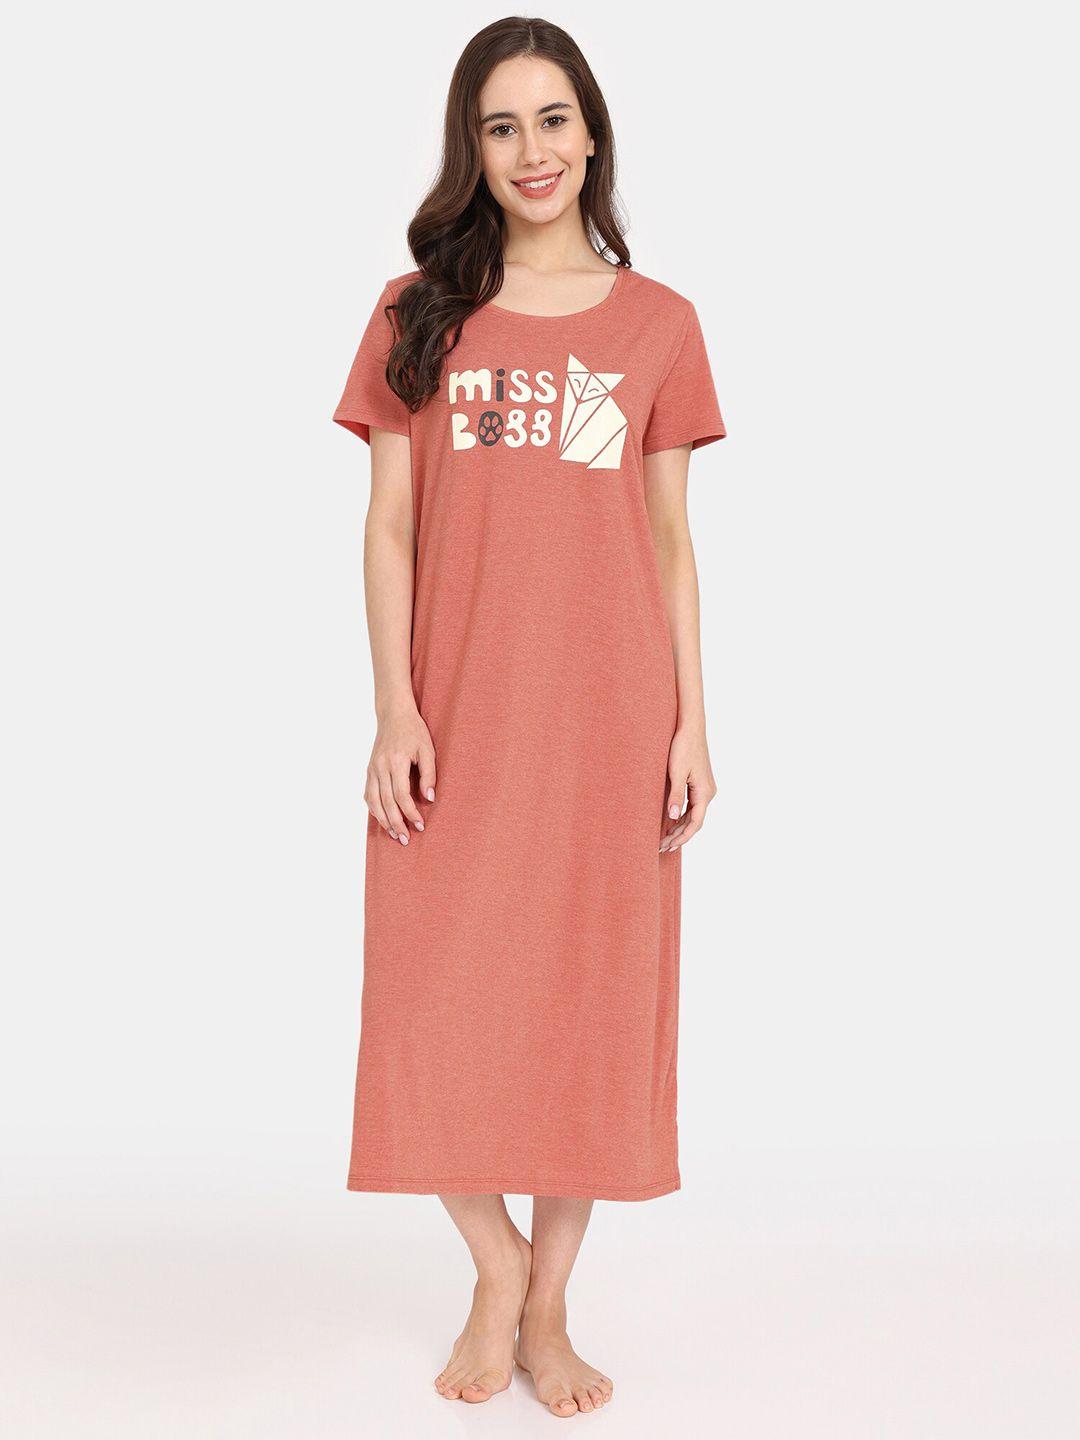 rosaline by zivame graphic printed pure cotton t-shirt nightdress